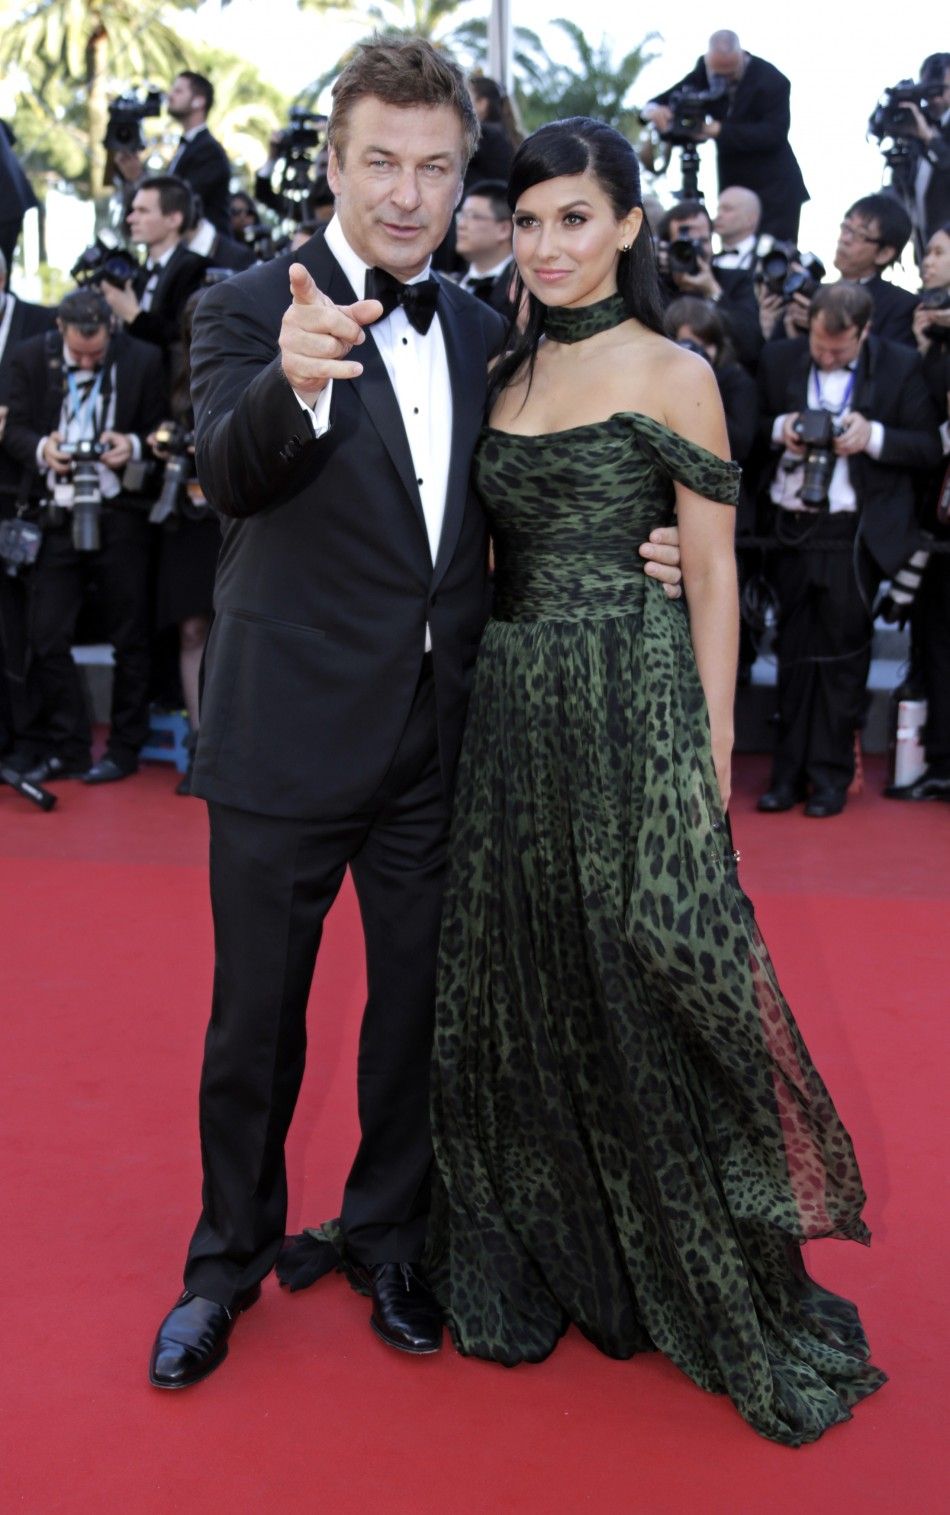 Cannes Film Festival 2012 Red Carpet 